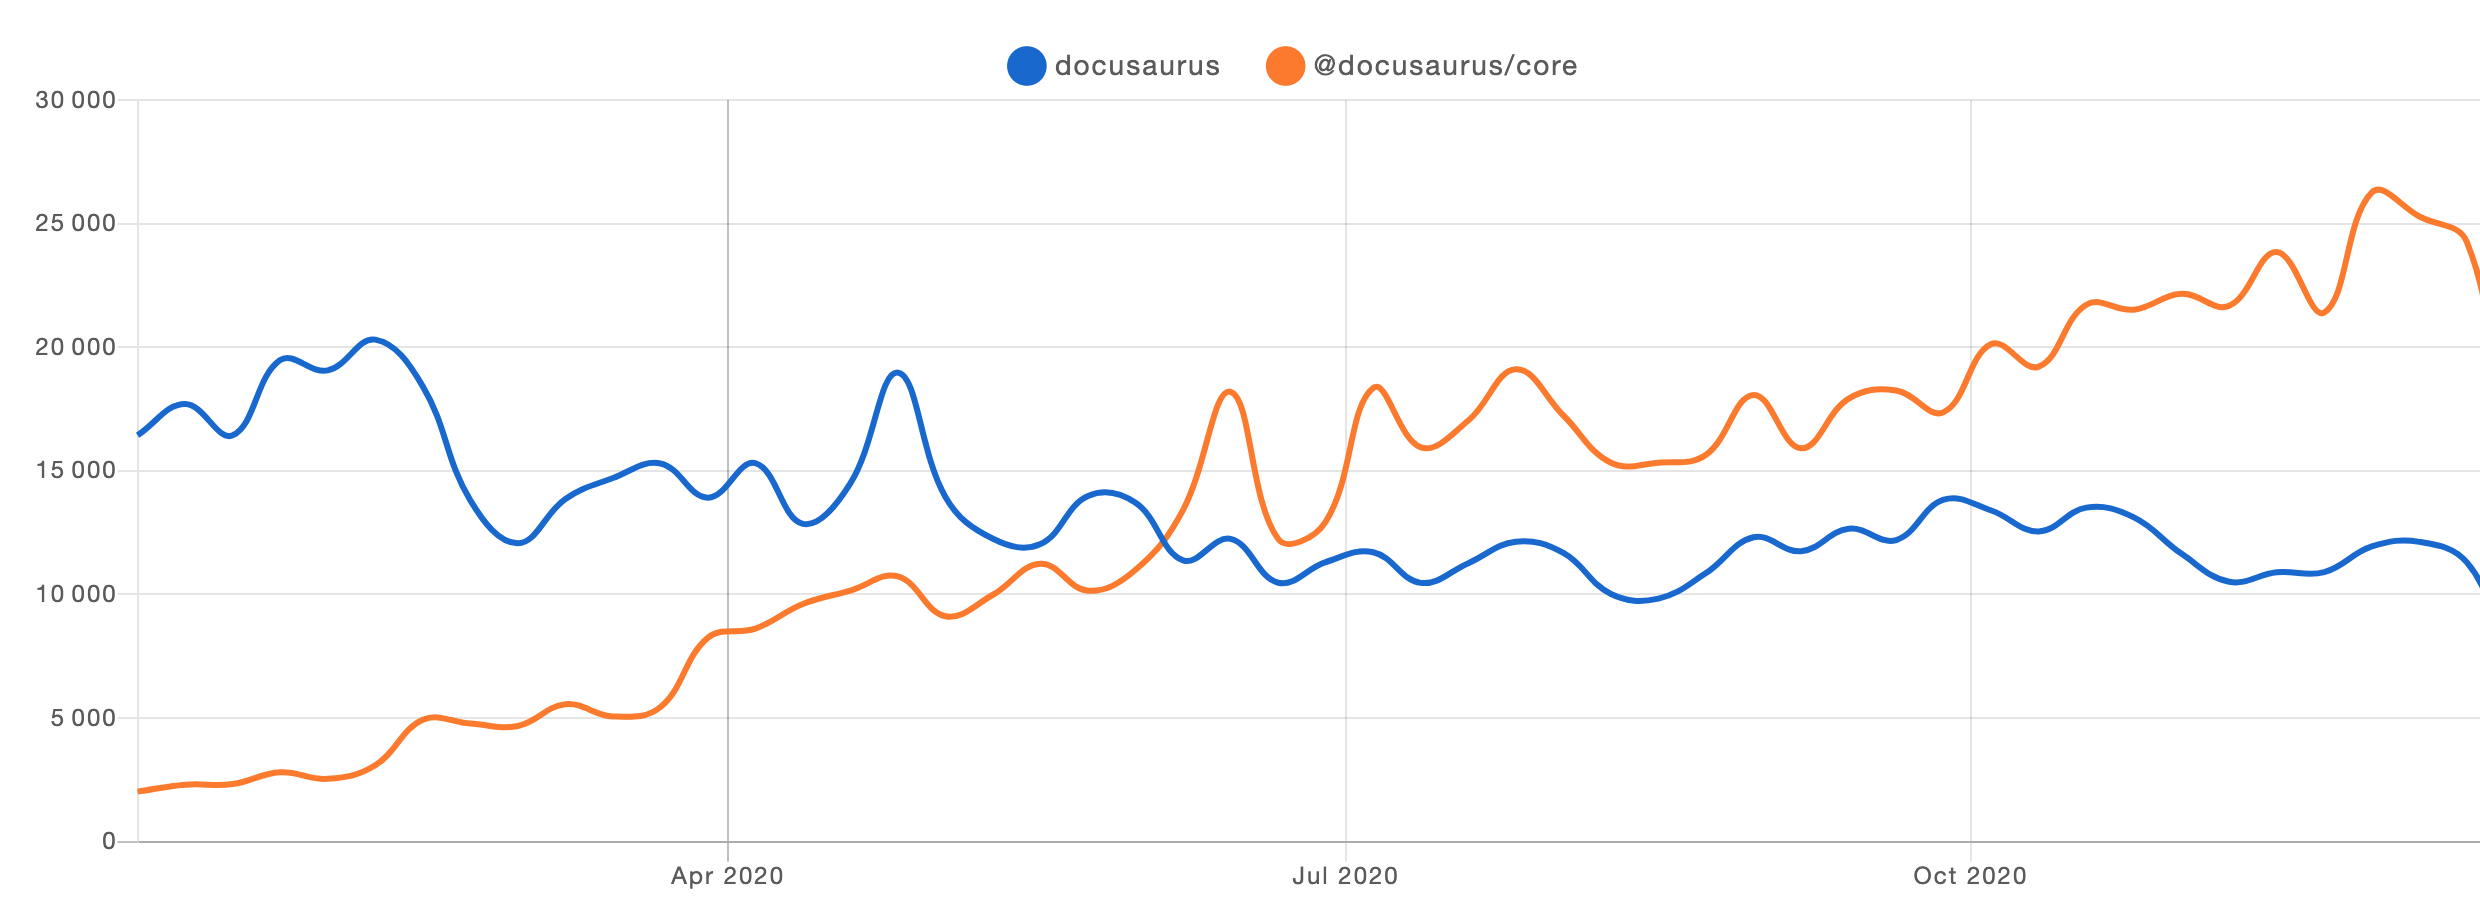 Docusaurus v1 vs. v2 npm trends of the year 2020. 도큐사우루스 v2의 설치는 눈에 띄게 증가하고 있는 반면 v1은 약간 하향세입니다. v1 설치는 15000에서 시작해서 10000으로 줄어들었지만 v2는 2000에서 시작해서 25000까지 늘어났습니다. The intersection happens around June 2020.